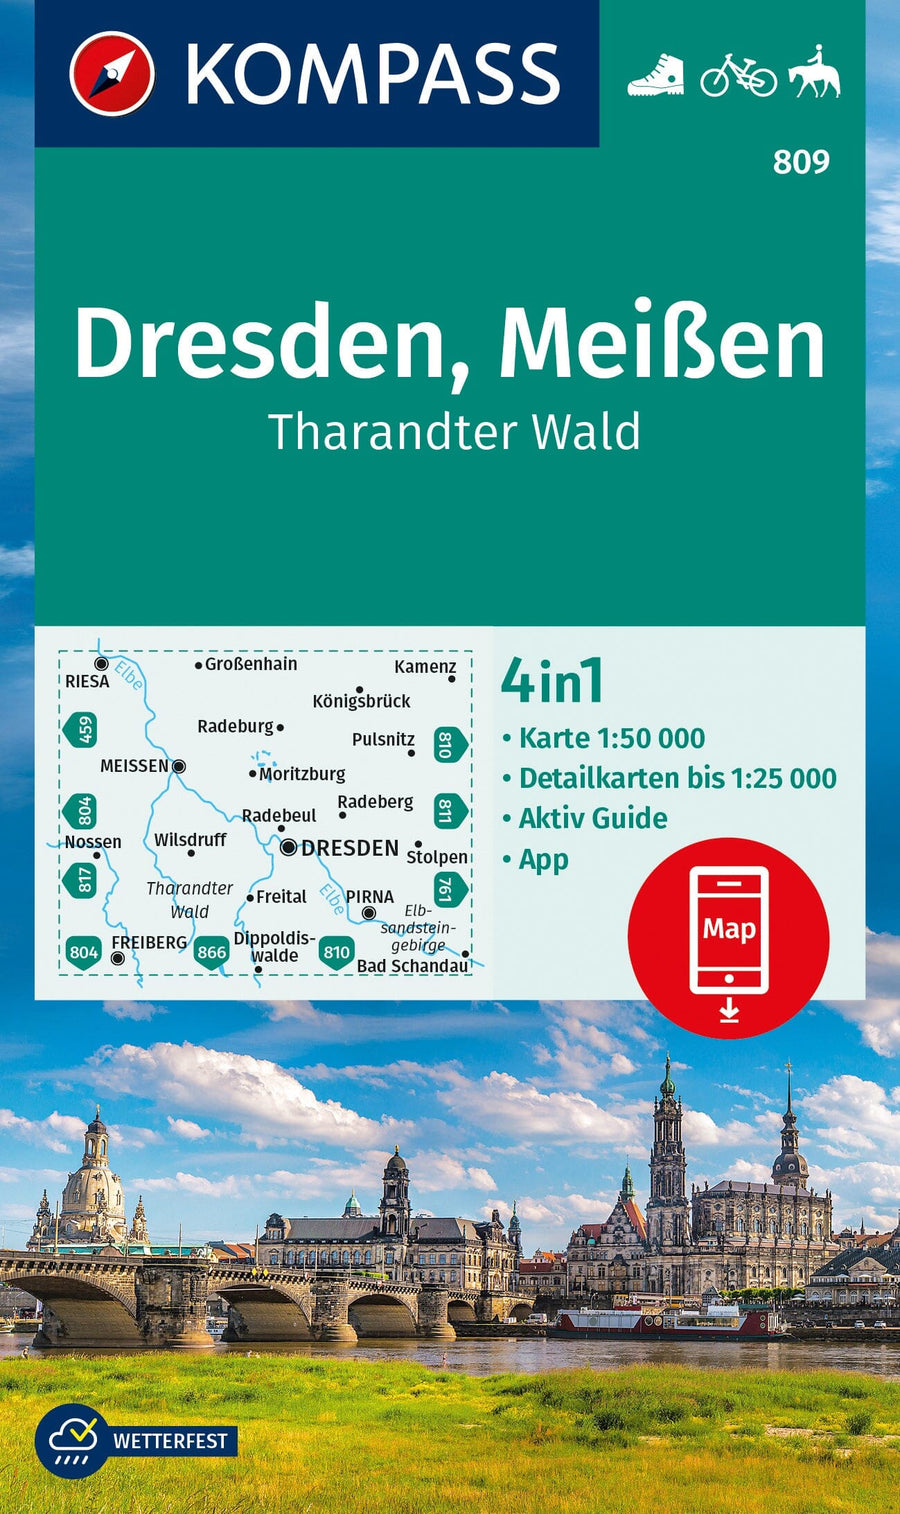 Carte de randonnée n° 809 - Dresde, Meißen, forêt de Tharandt (Allemagne) | Kompass carte pliée Kompass 